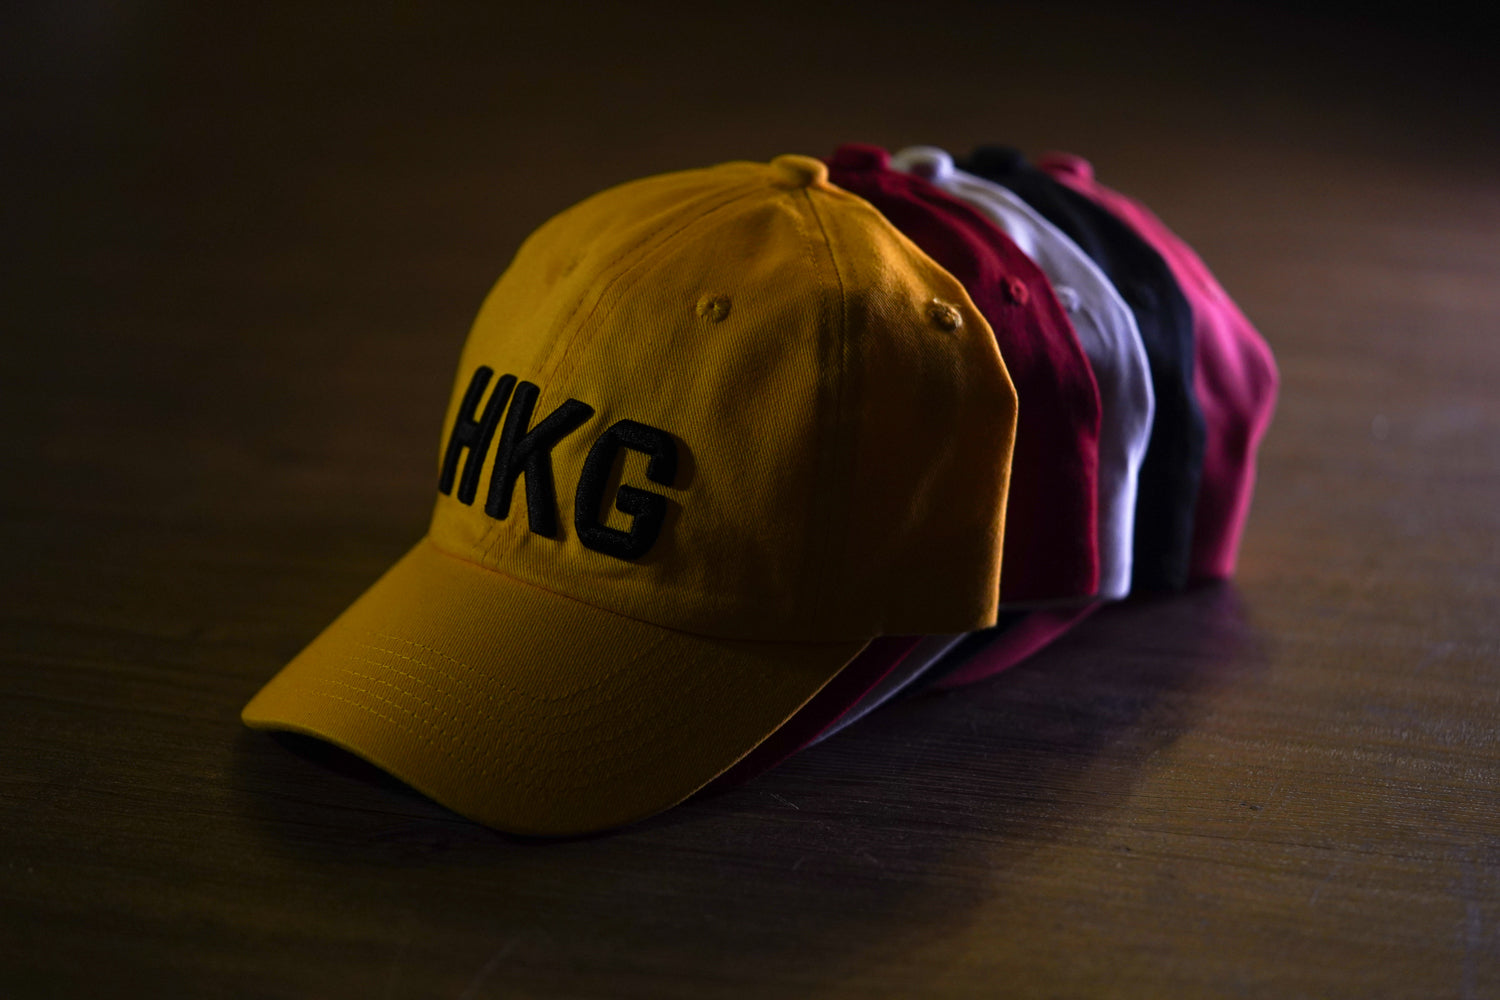 HKG Cap